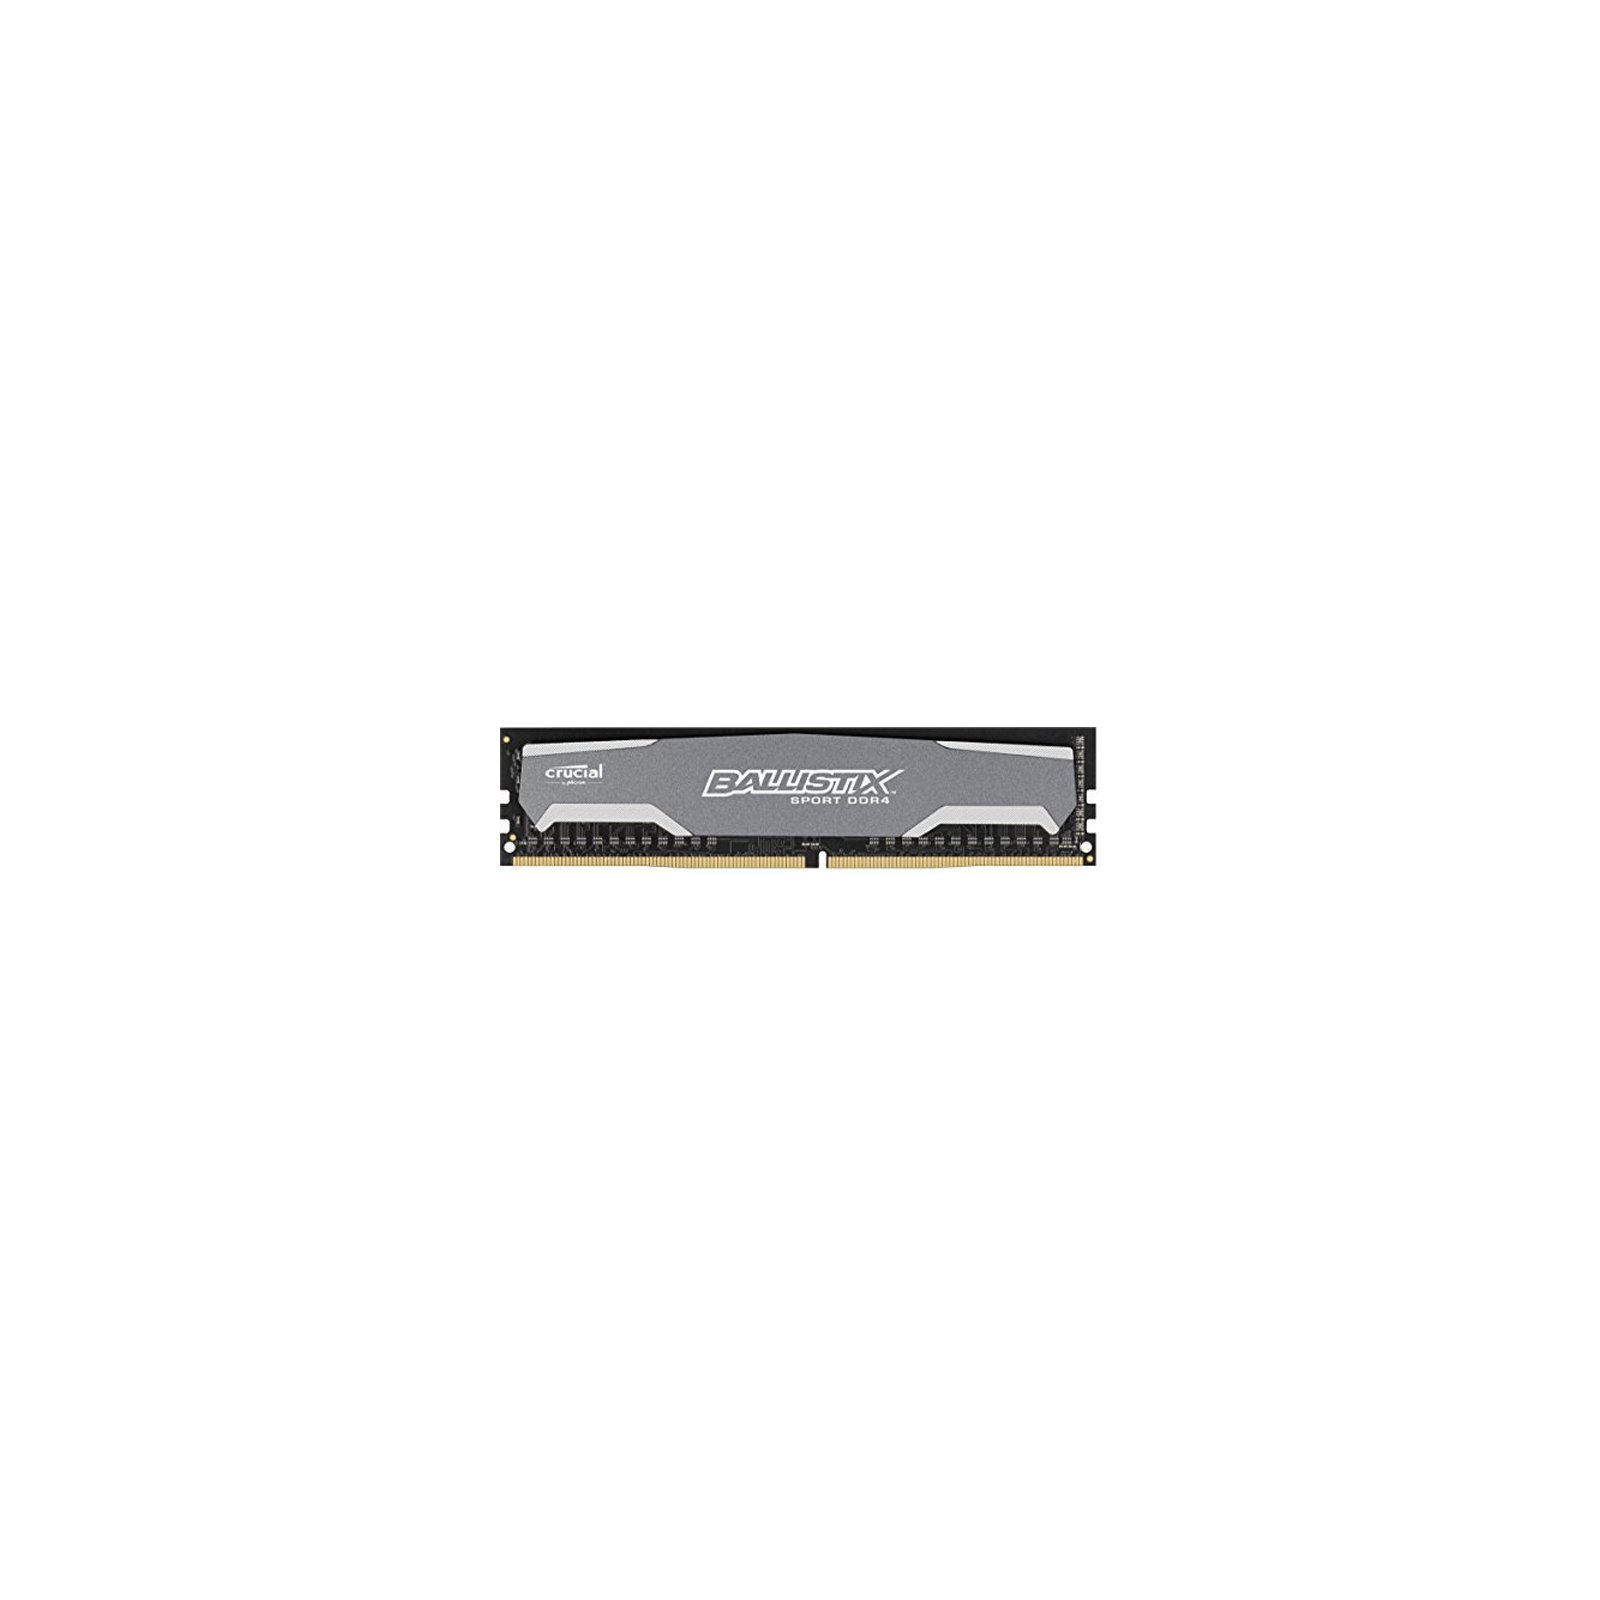 Модуль памяти для компьютера DDR4 4GB 2400 MHz Ballistix Sport Micron (BLS4G4D240FSA)